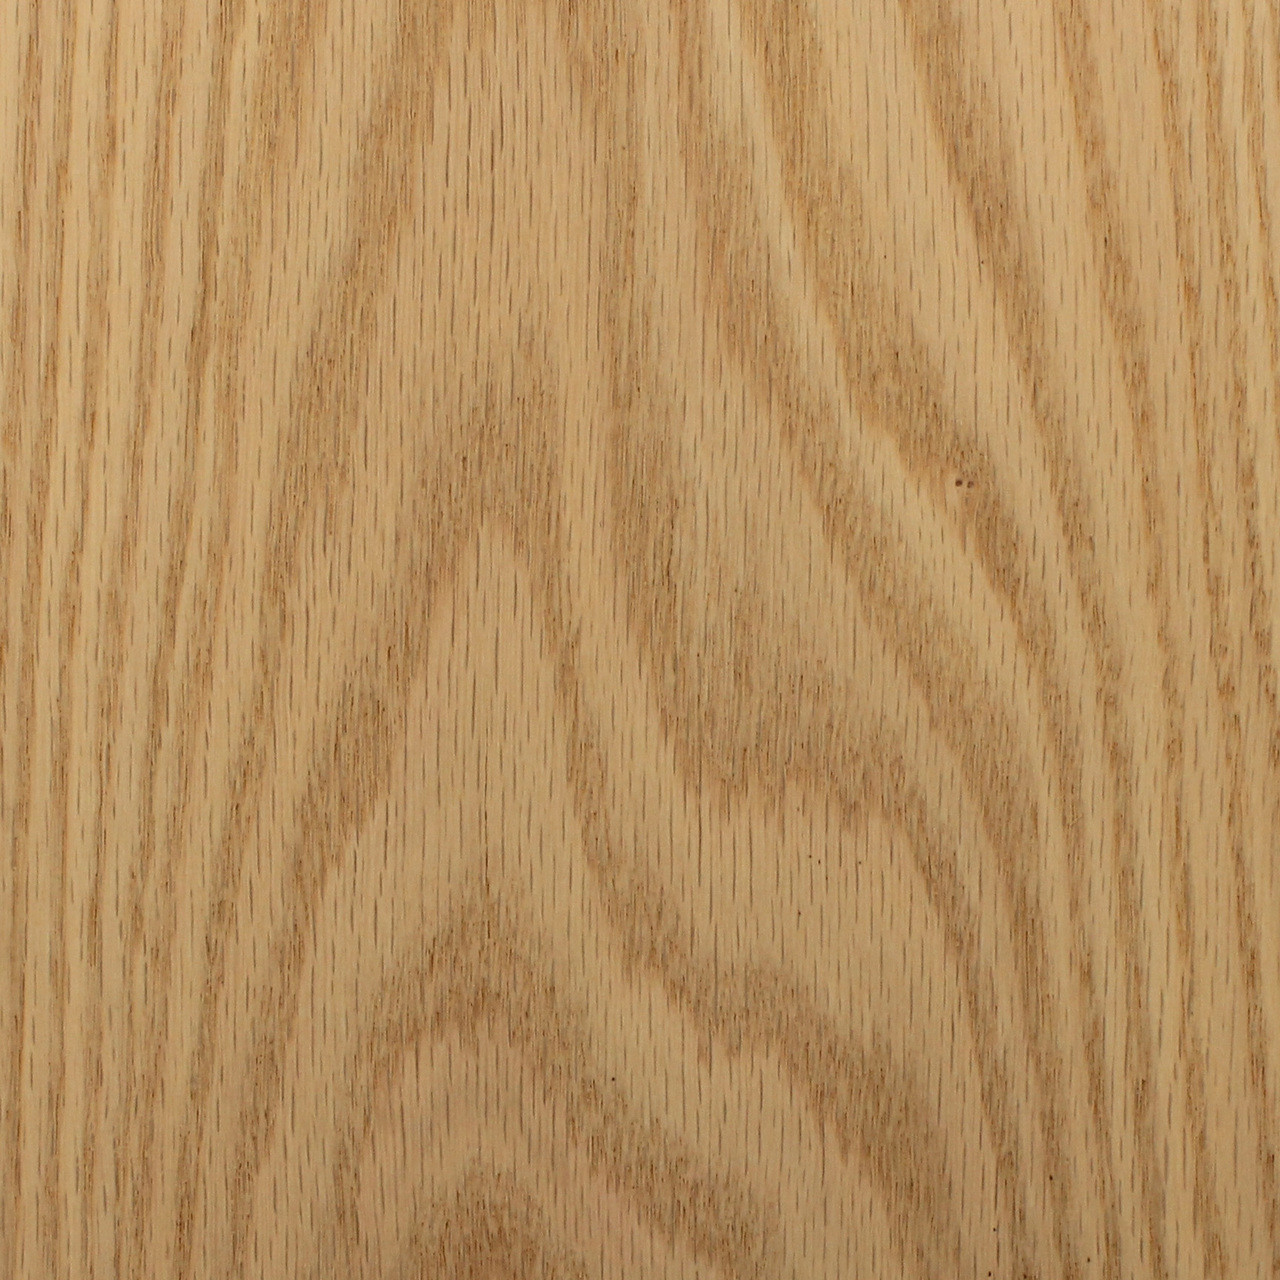 Beech Sheet 12x22 cm 3sheets Mahogany Oak Thickness 0.75 mm Wood Veneer 